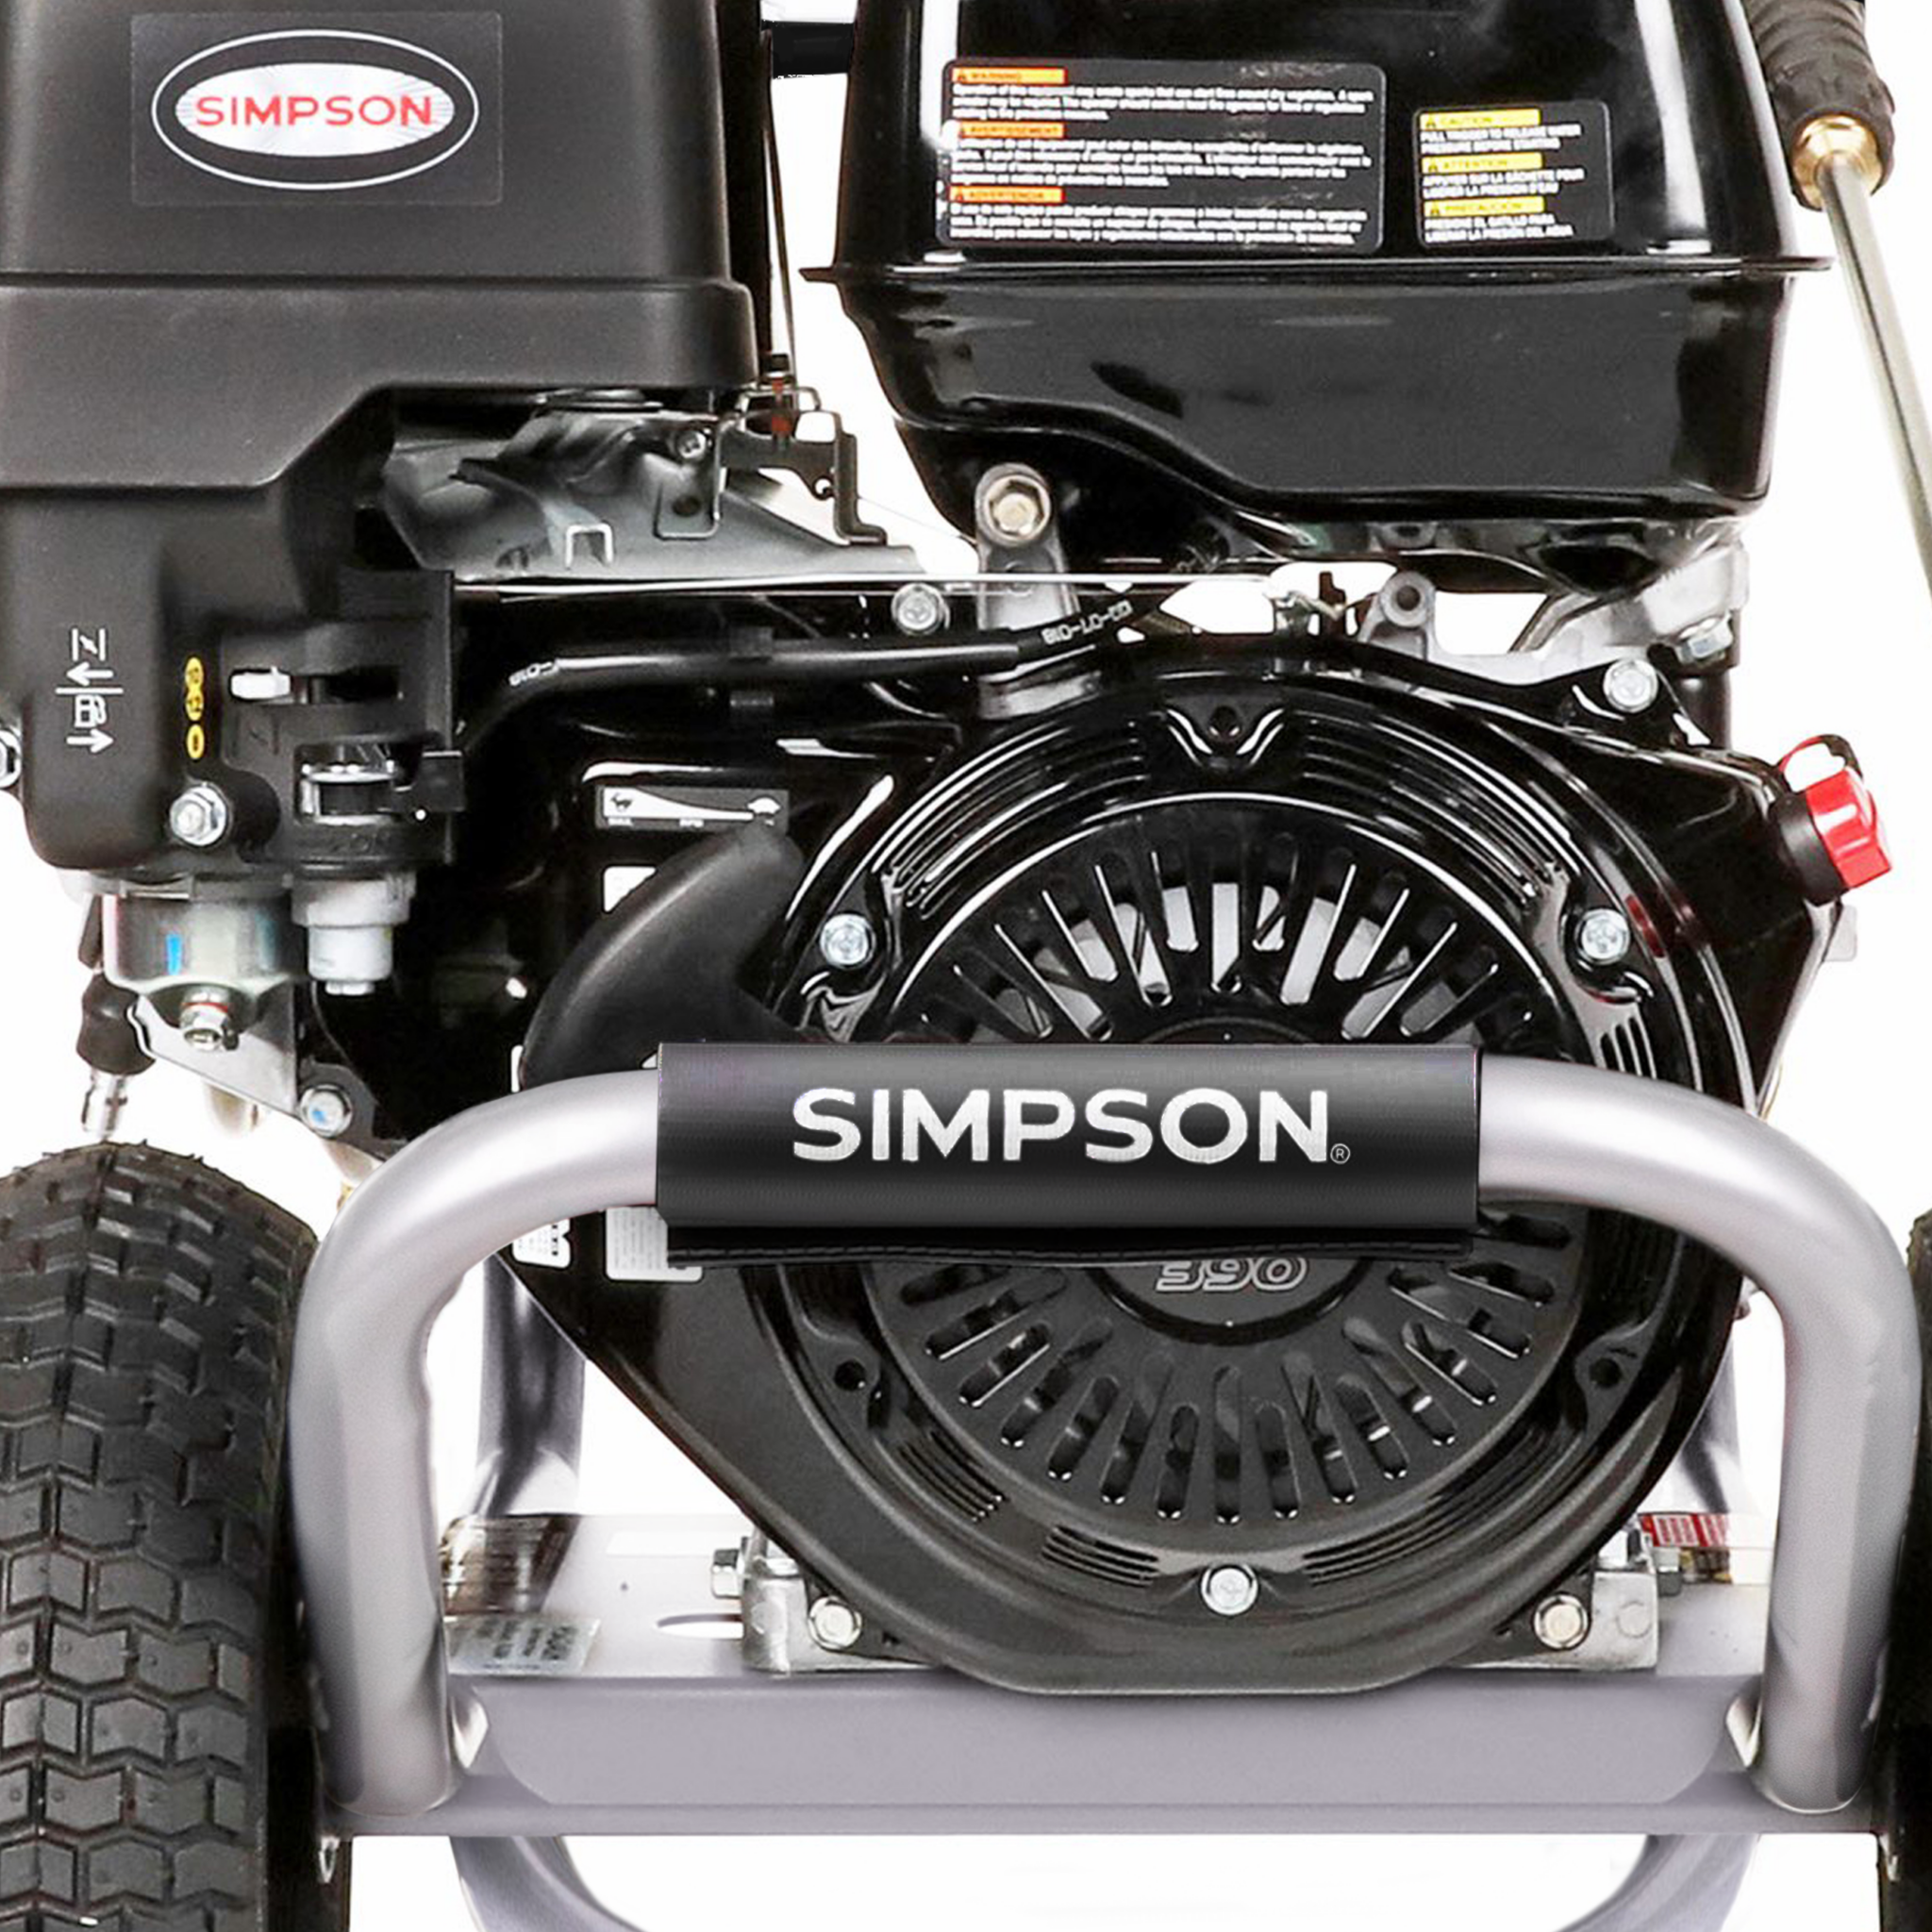 Simpson PS4240 PowerShot Cold Water Honda GX390 (389cc) Gas Engine Pressure Washer - 4200 PSI - 4.0 GPM Industrial Triplex Pump